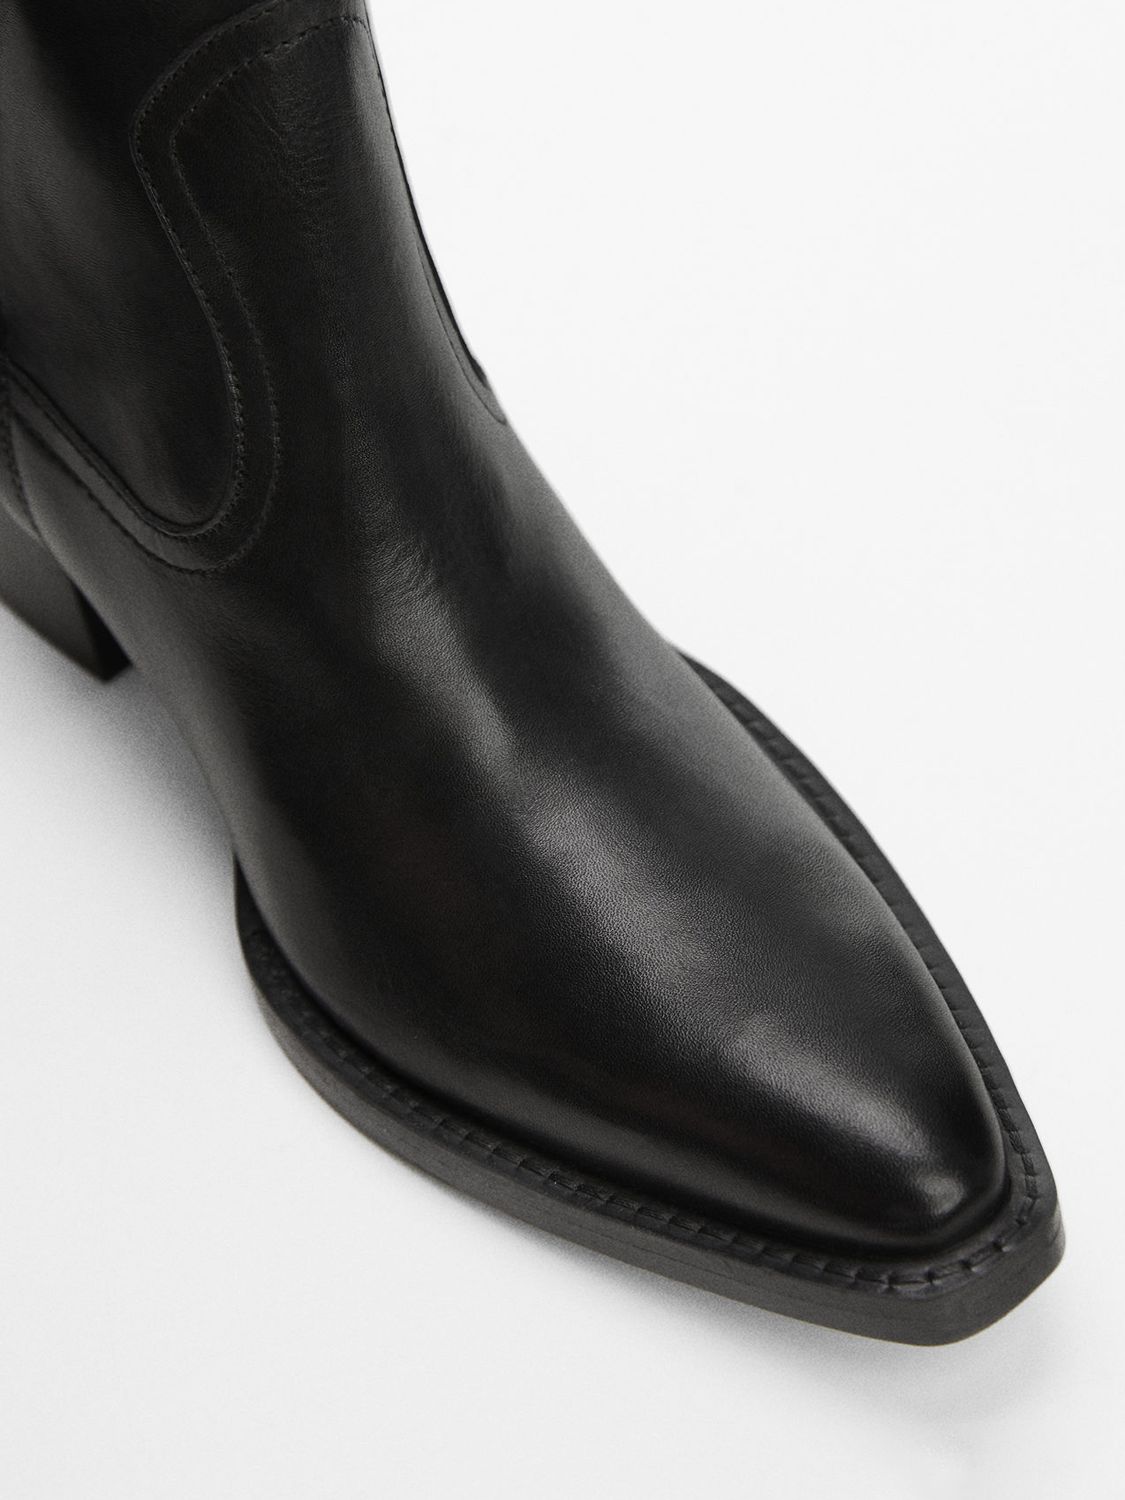 Mango Coa Leather Cowboy Boots, Black, 4